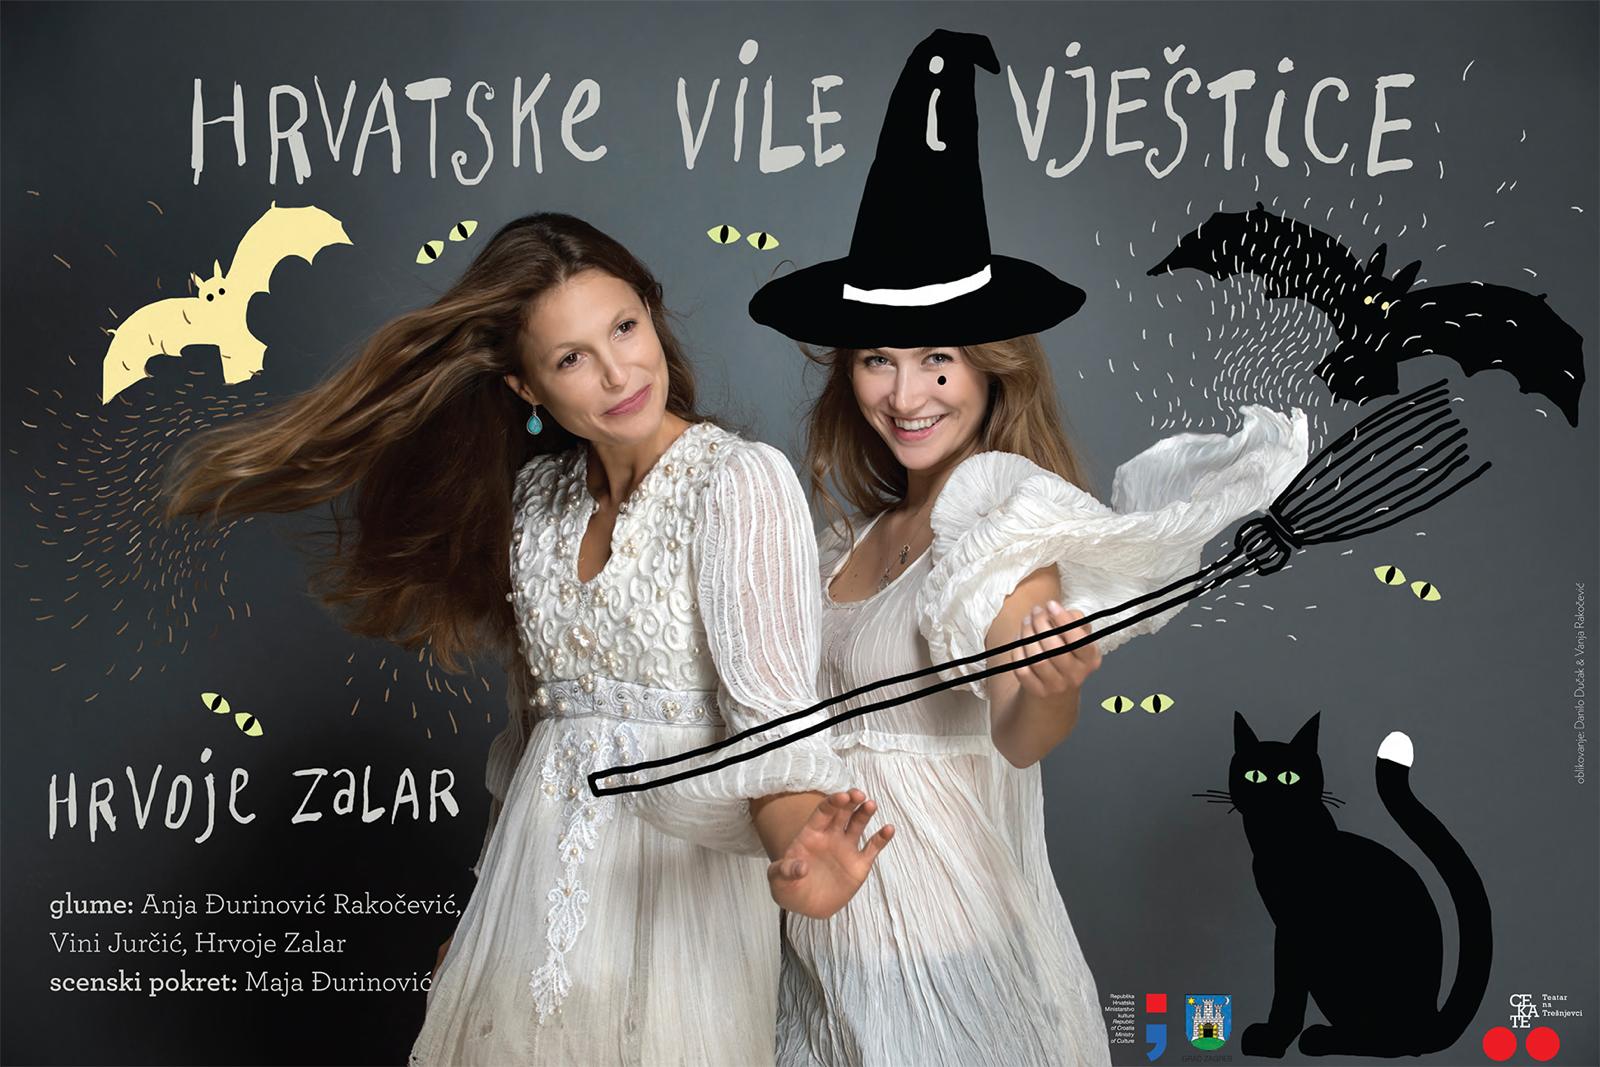 You are currently viewing Predstava “Hrvatske vile i vještice” u subotu u srcu grada